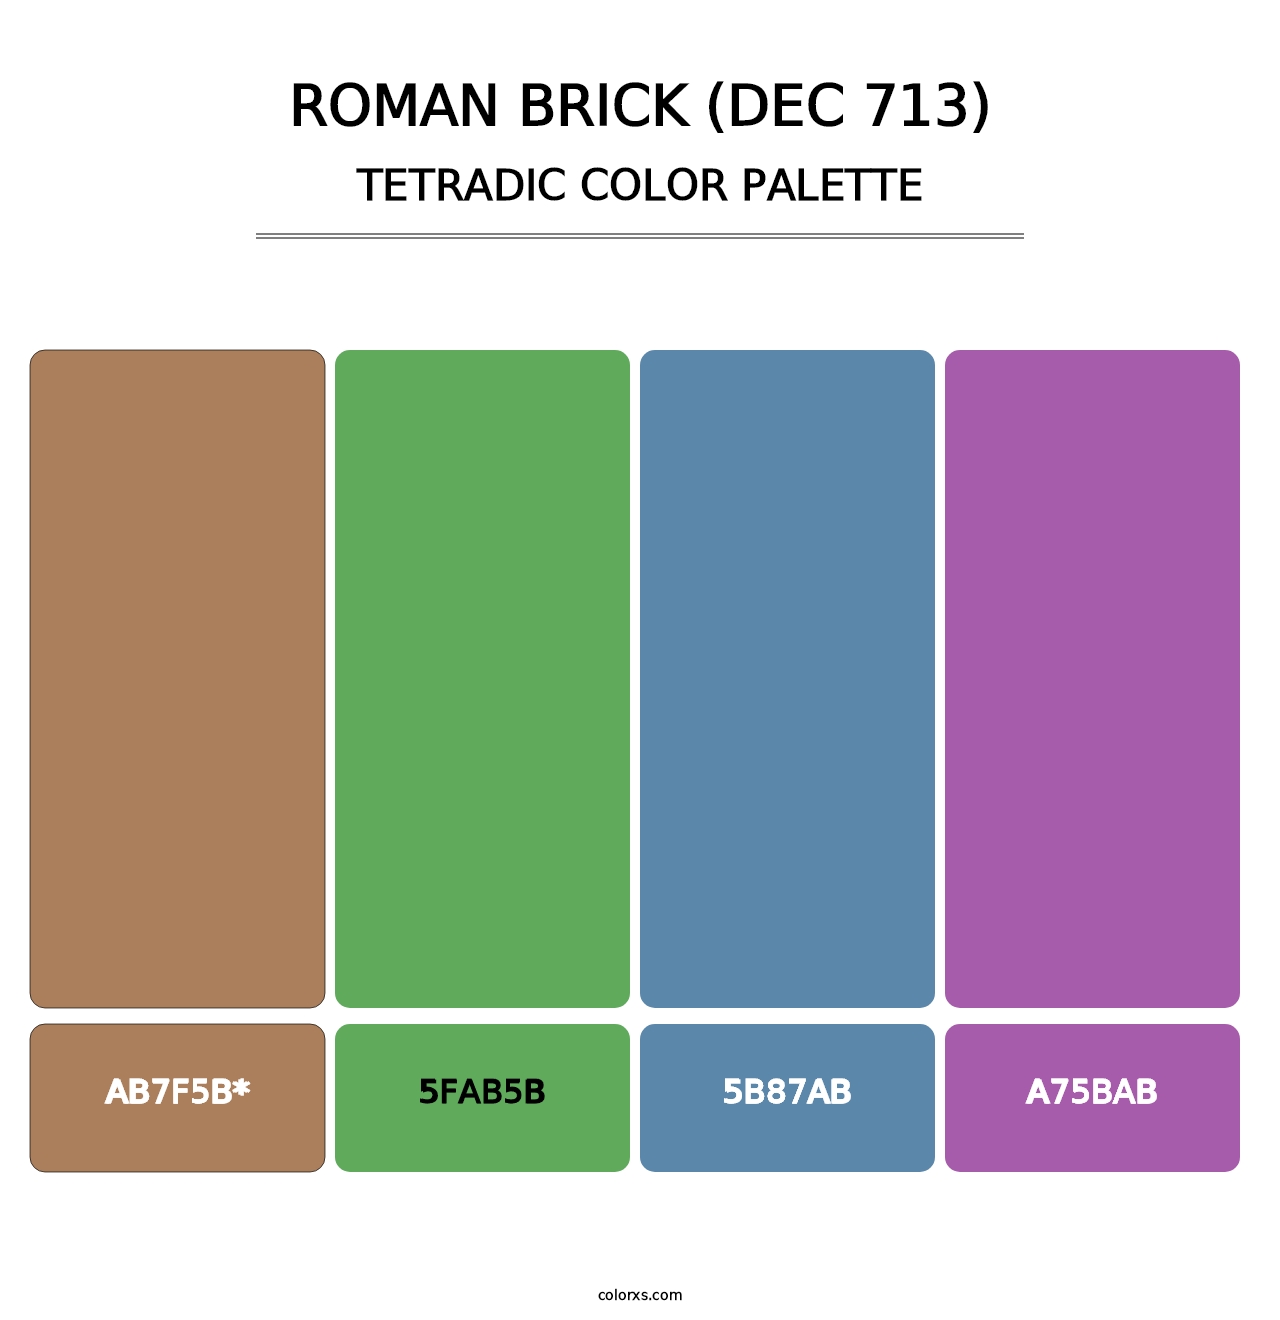 Roman Brick (DEC 713) - Tetradic Color Palette